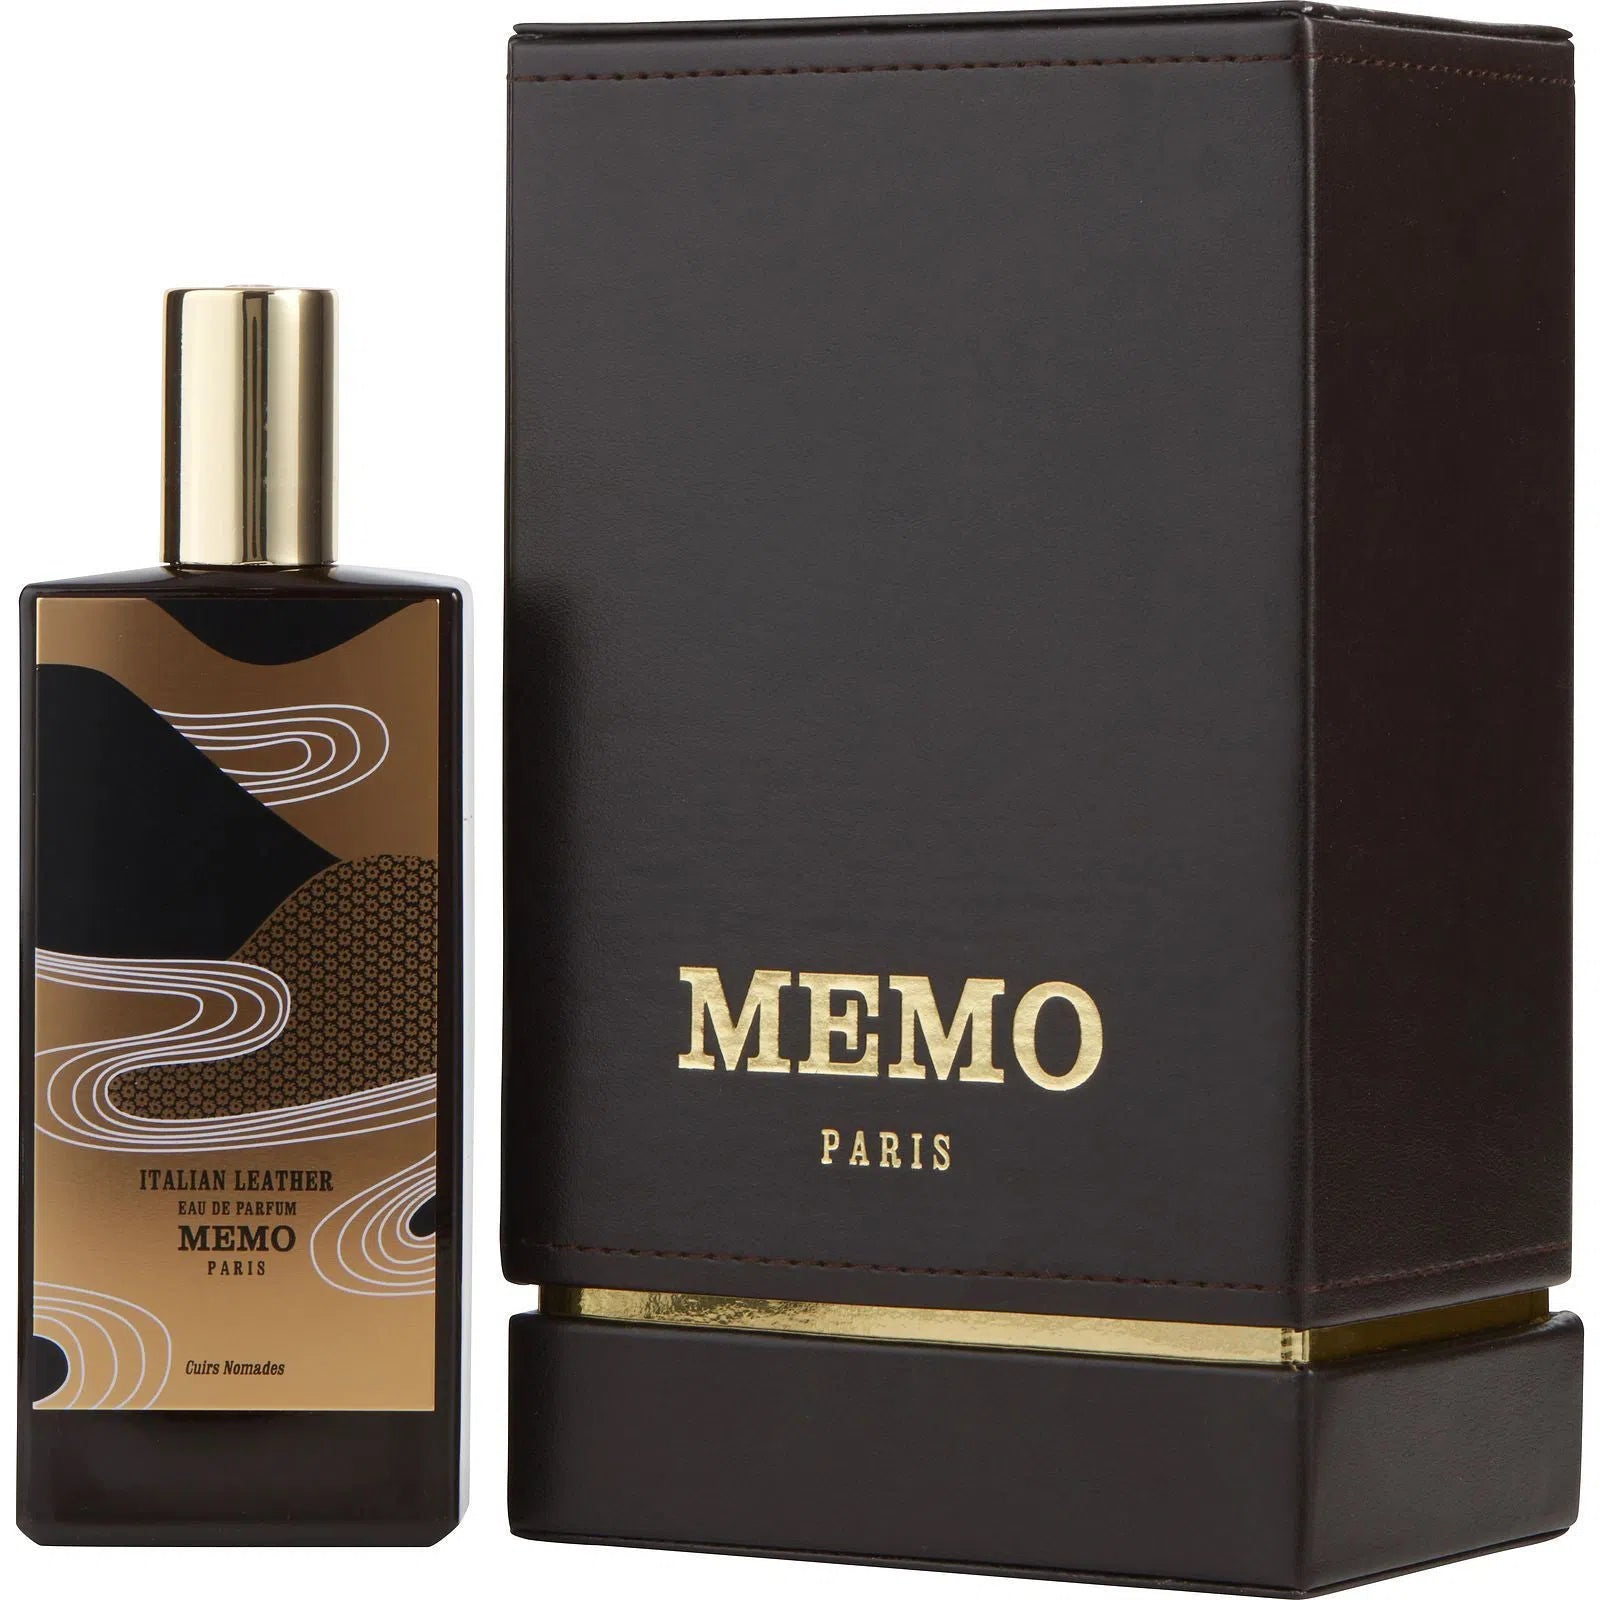 Perfume Memo Paris Italian Leather EDP (U) / 75 ml - 3700458611533- Prive Perfumes Honduras